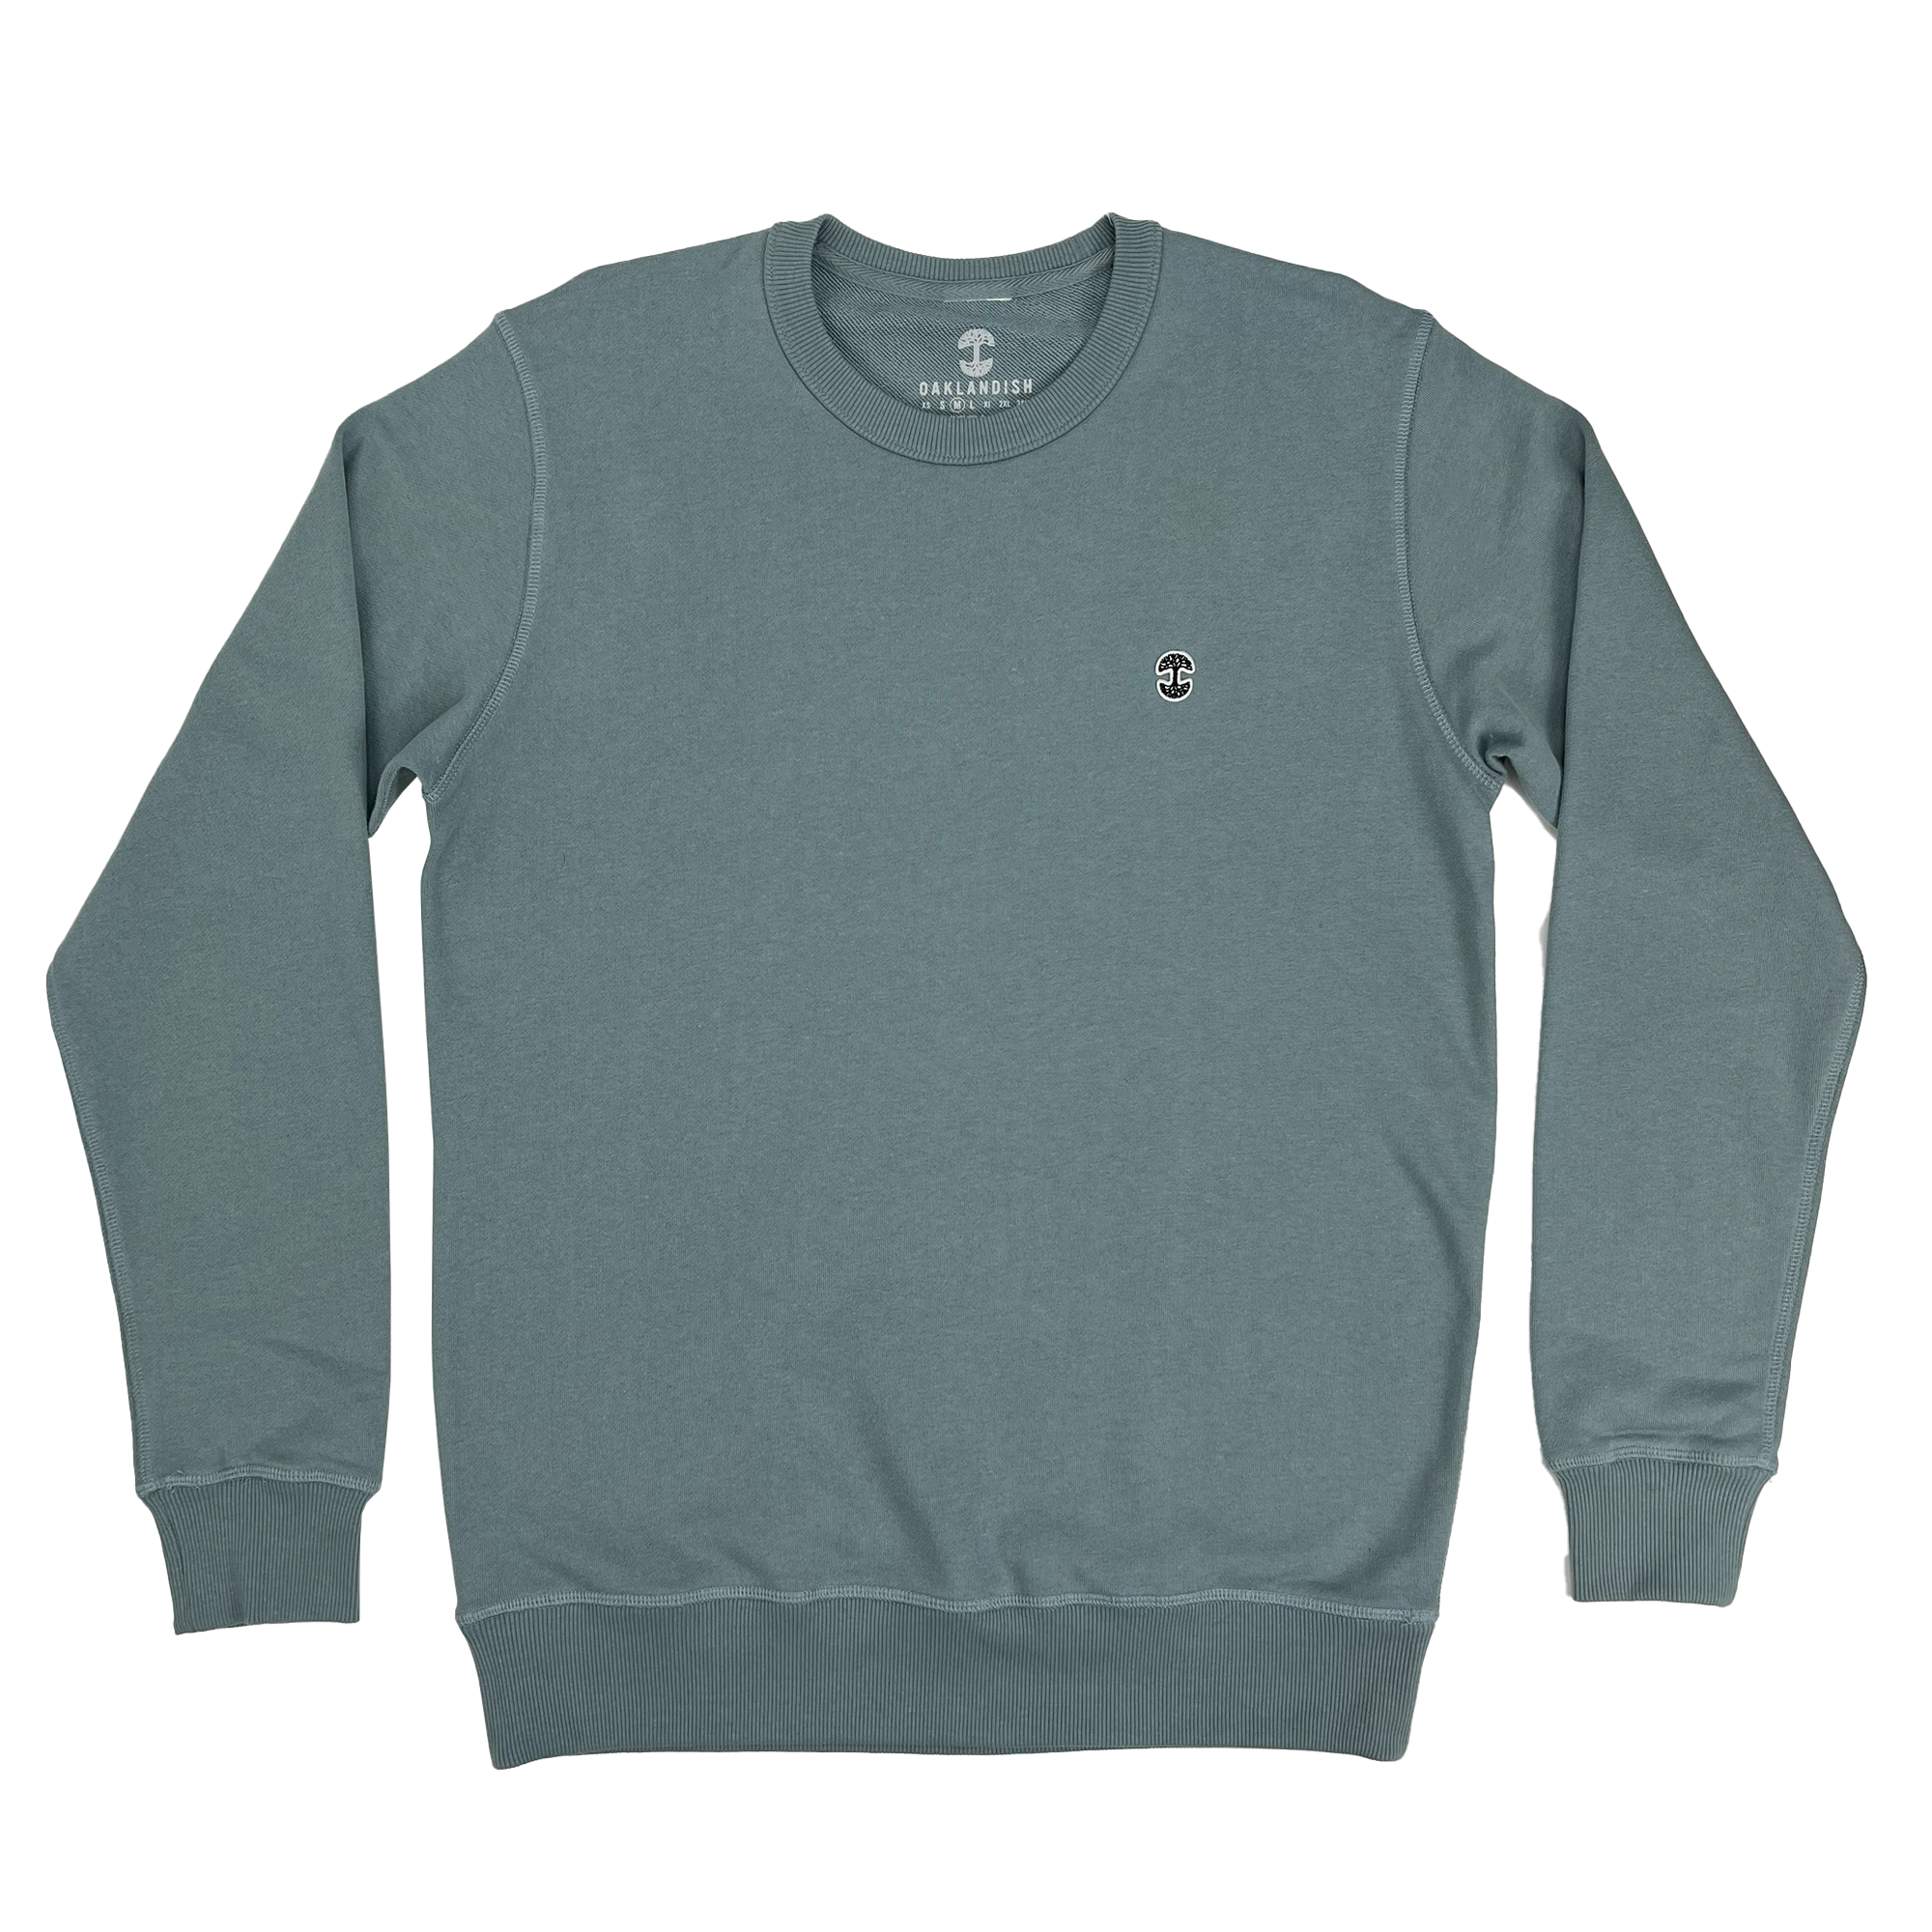 Front view of Premium crewneck sweatshirt - Oaklandish tree logo, Mineral